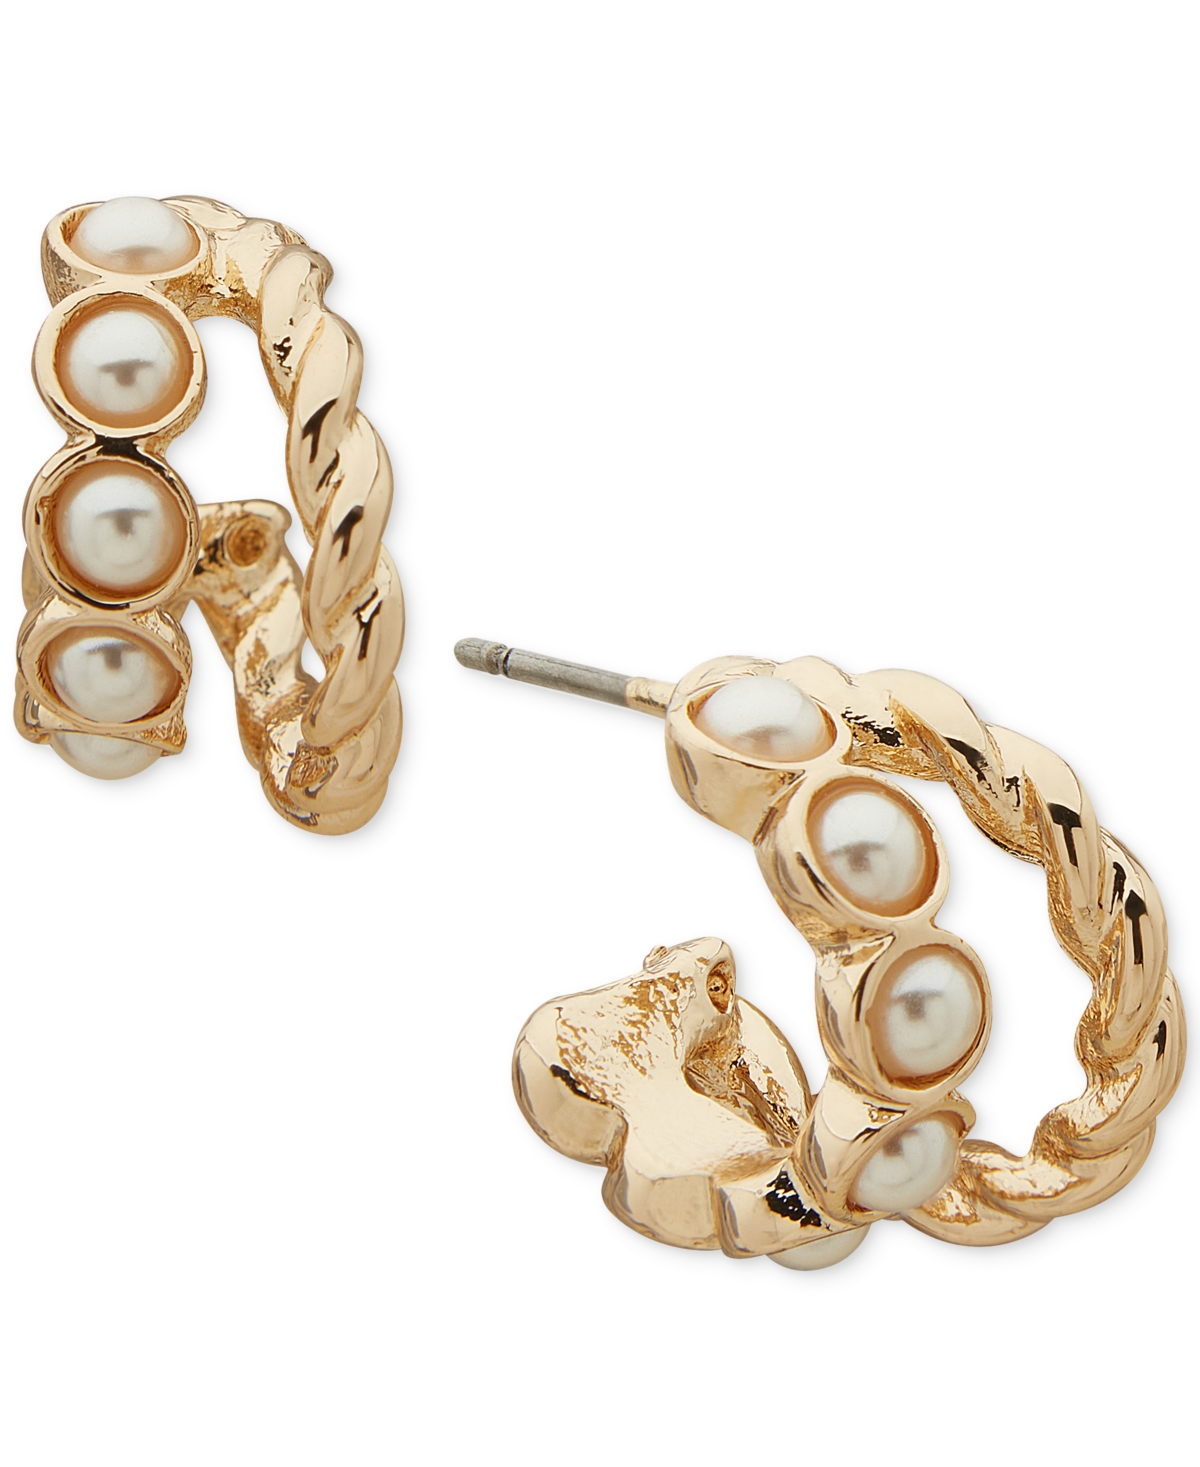 Gold-Tone Small Imitation Pearl Double-Row C-Hoop Earrings, 0.56" - Pearl